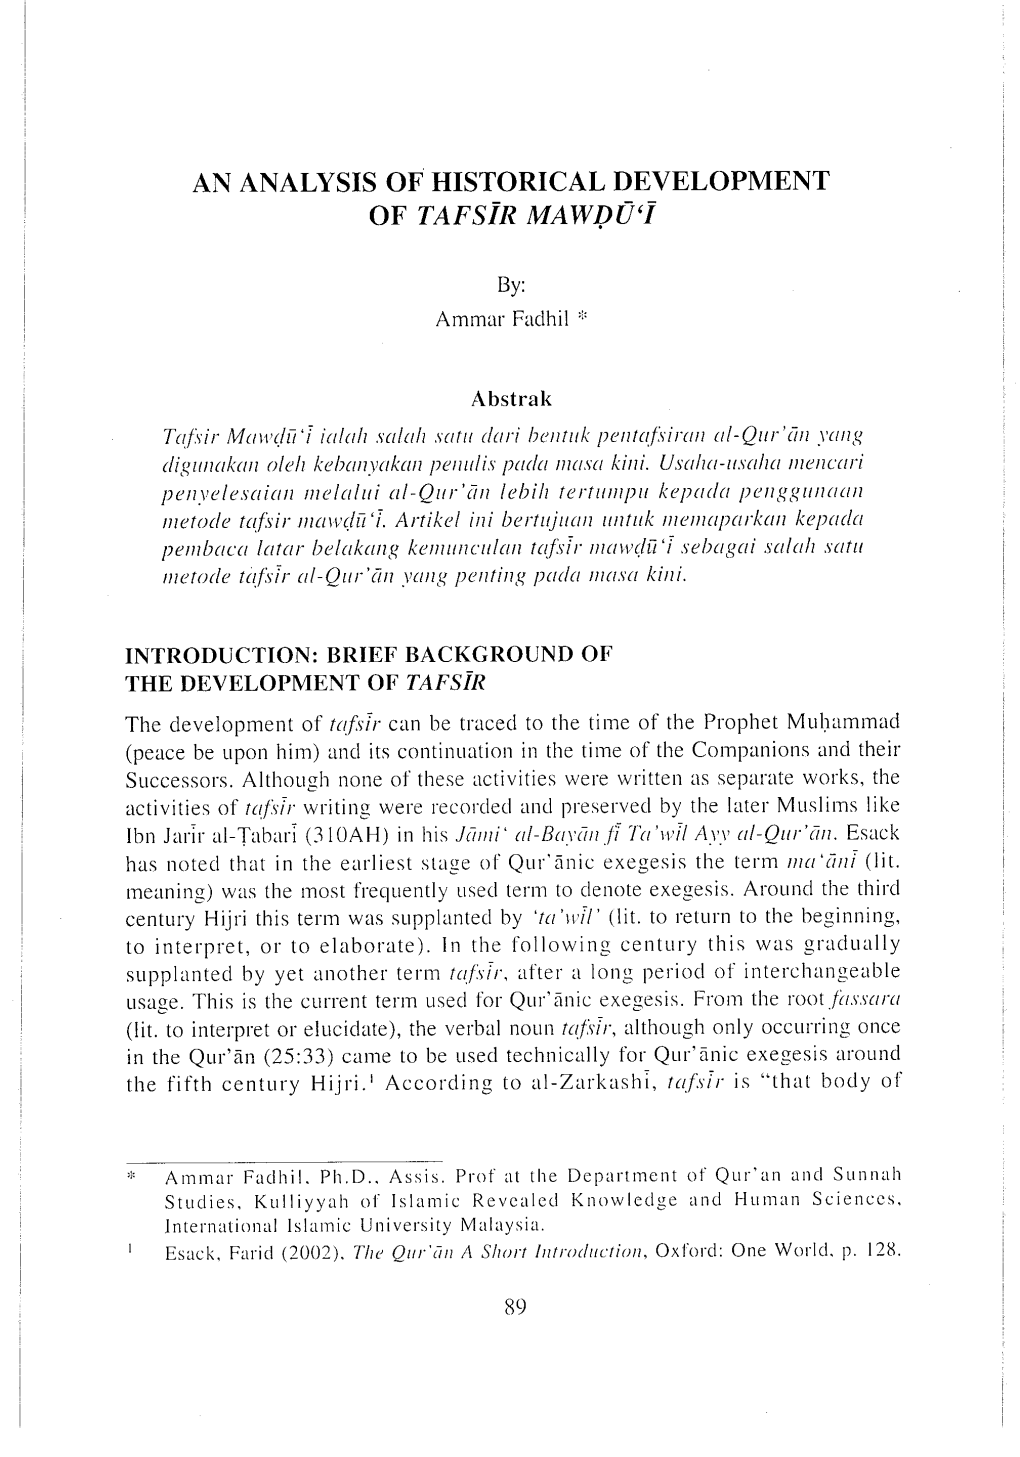 An Analysis of Historical Development of Tafsir Mawdu'i